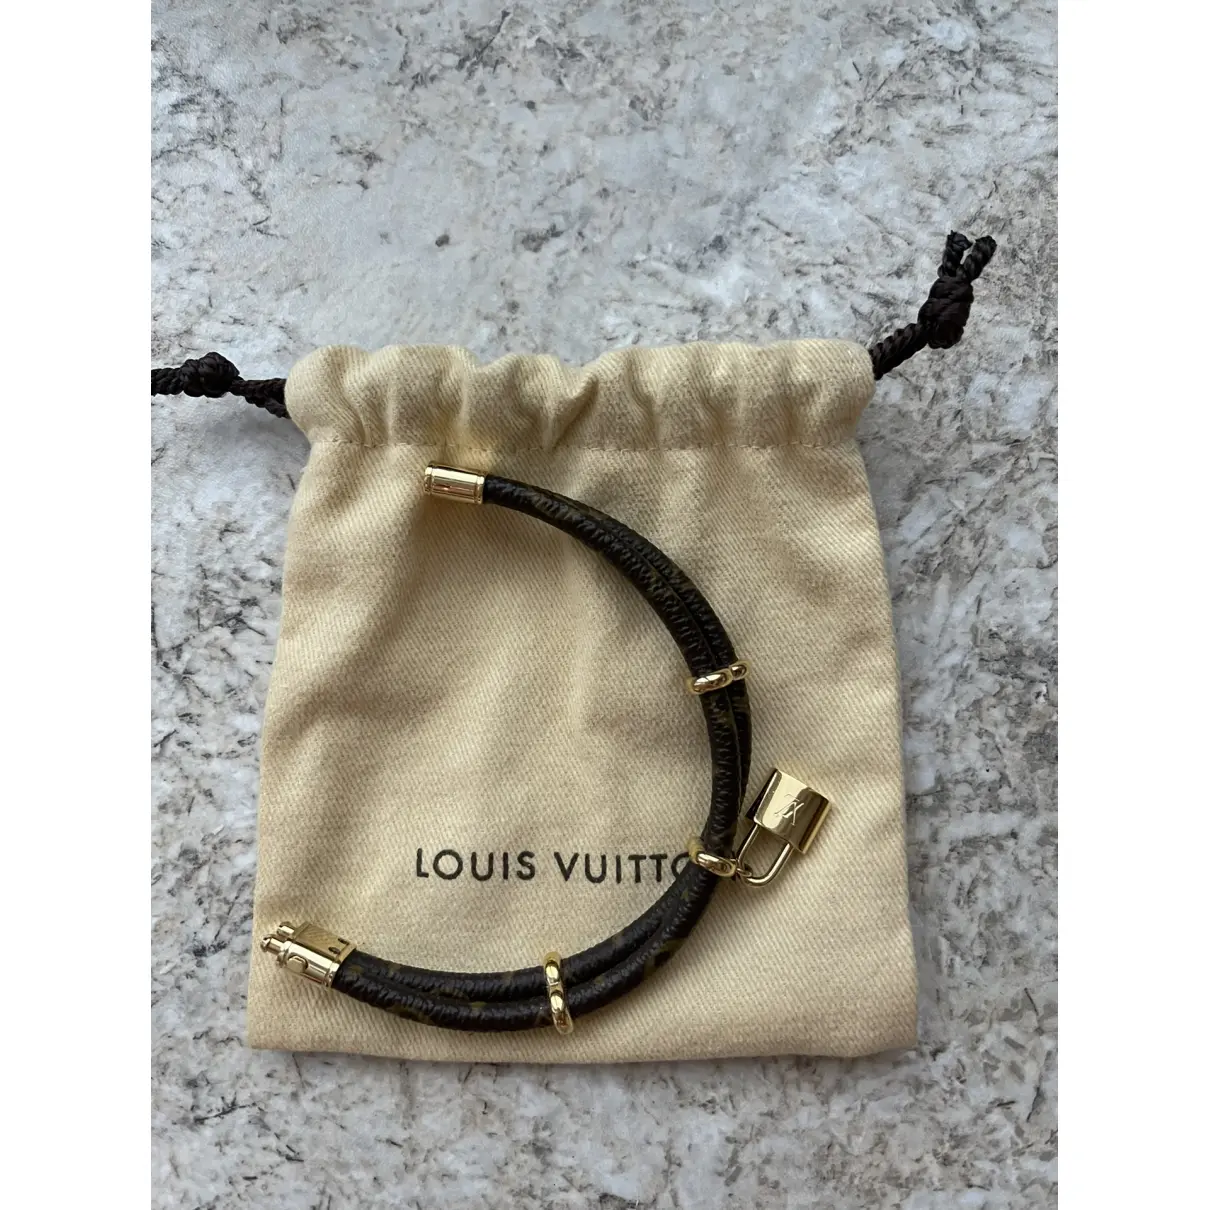 Buy Louis Vuitton Keep It bracelet online